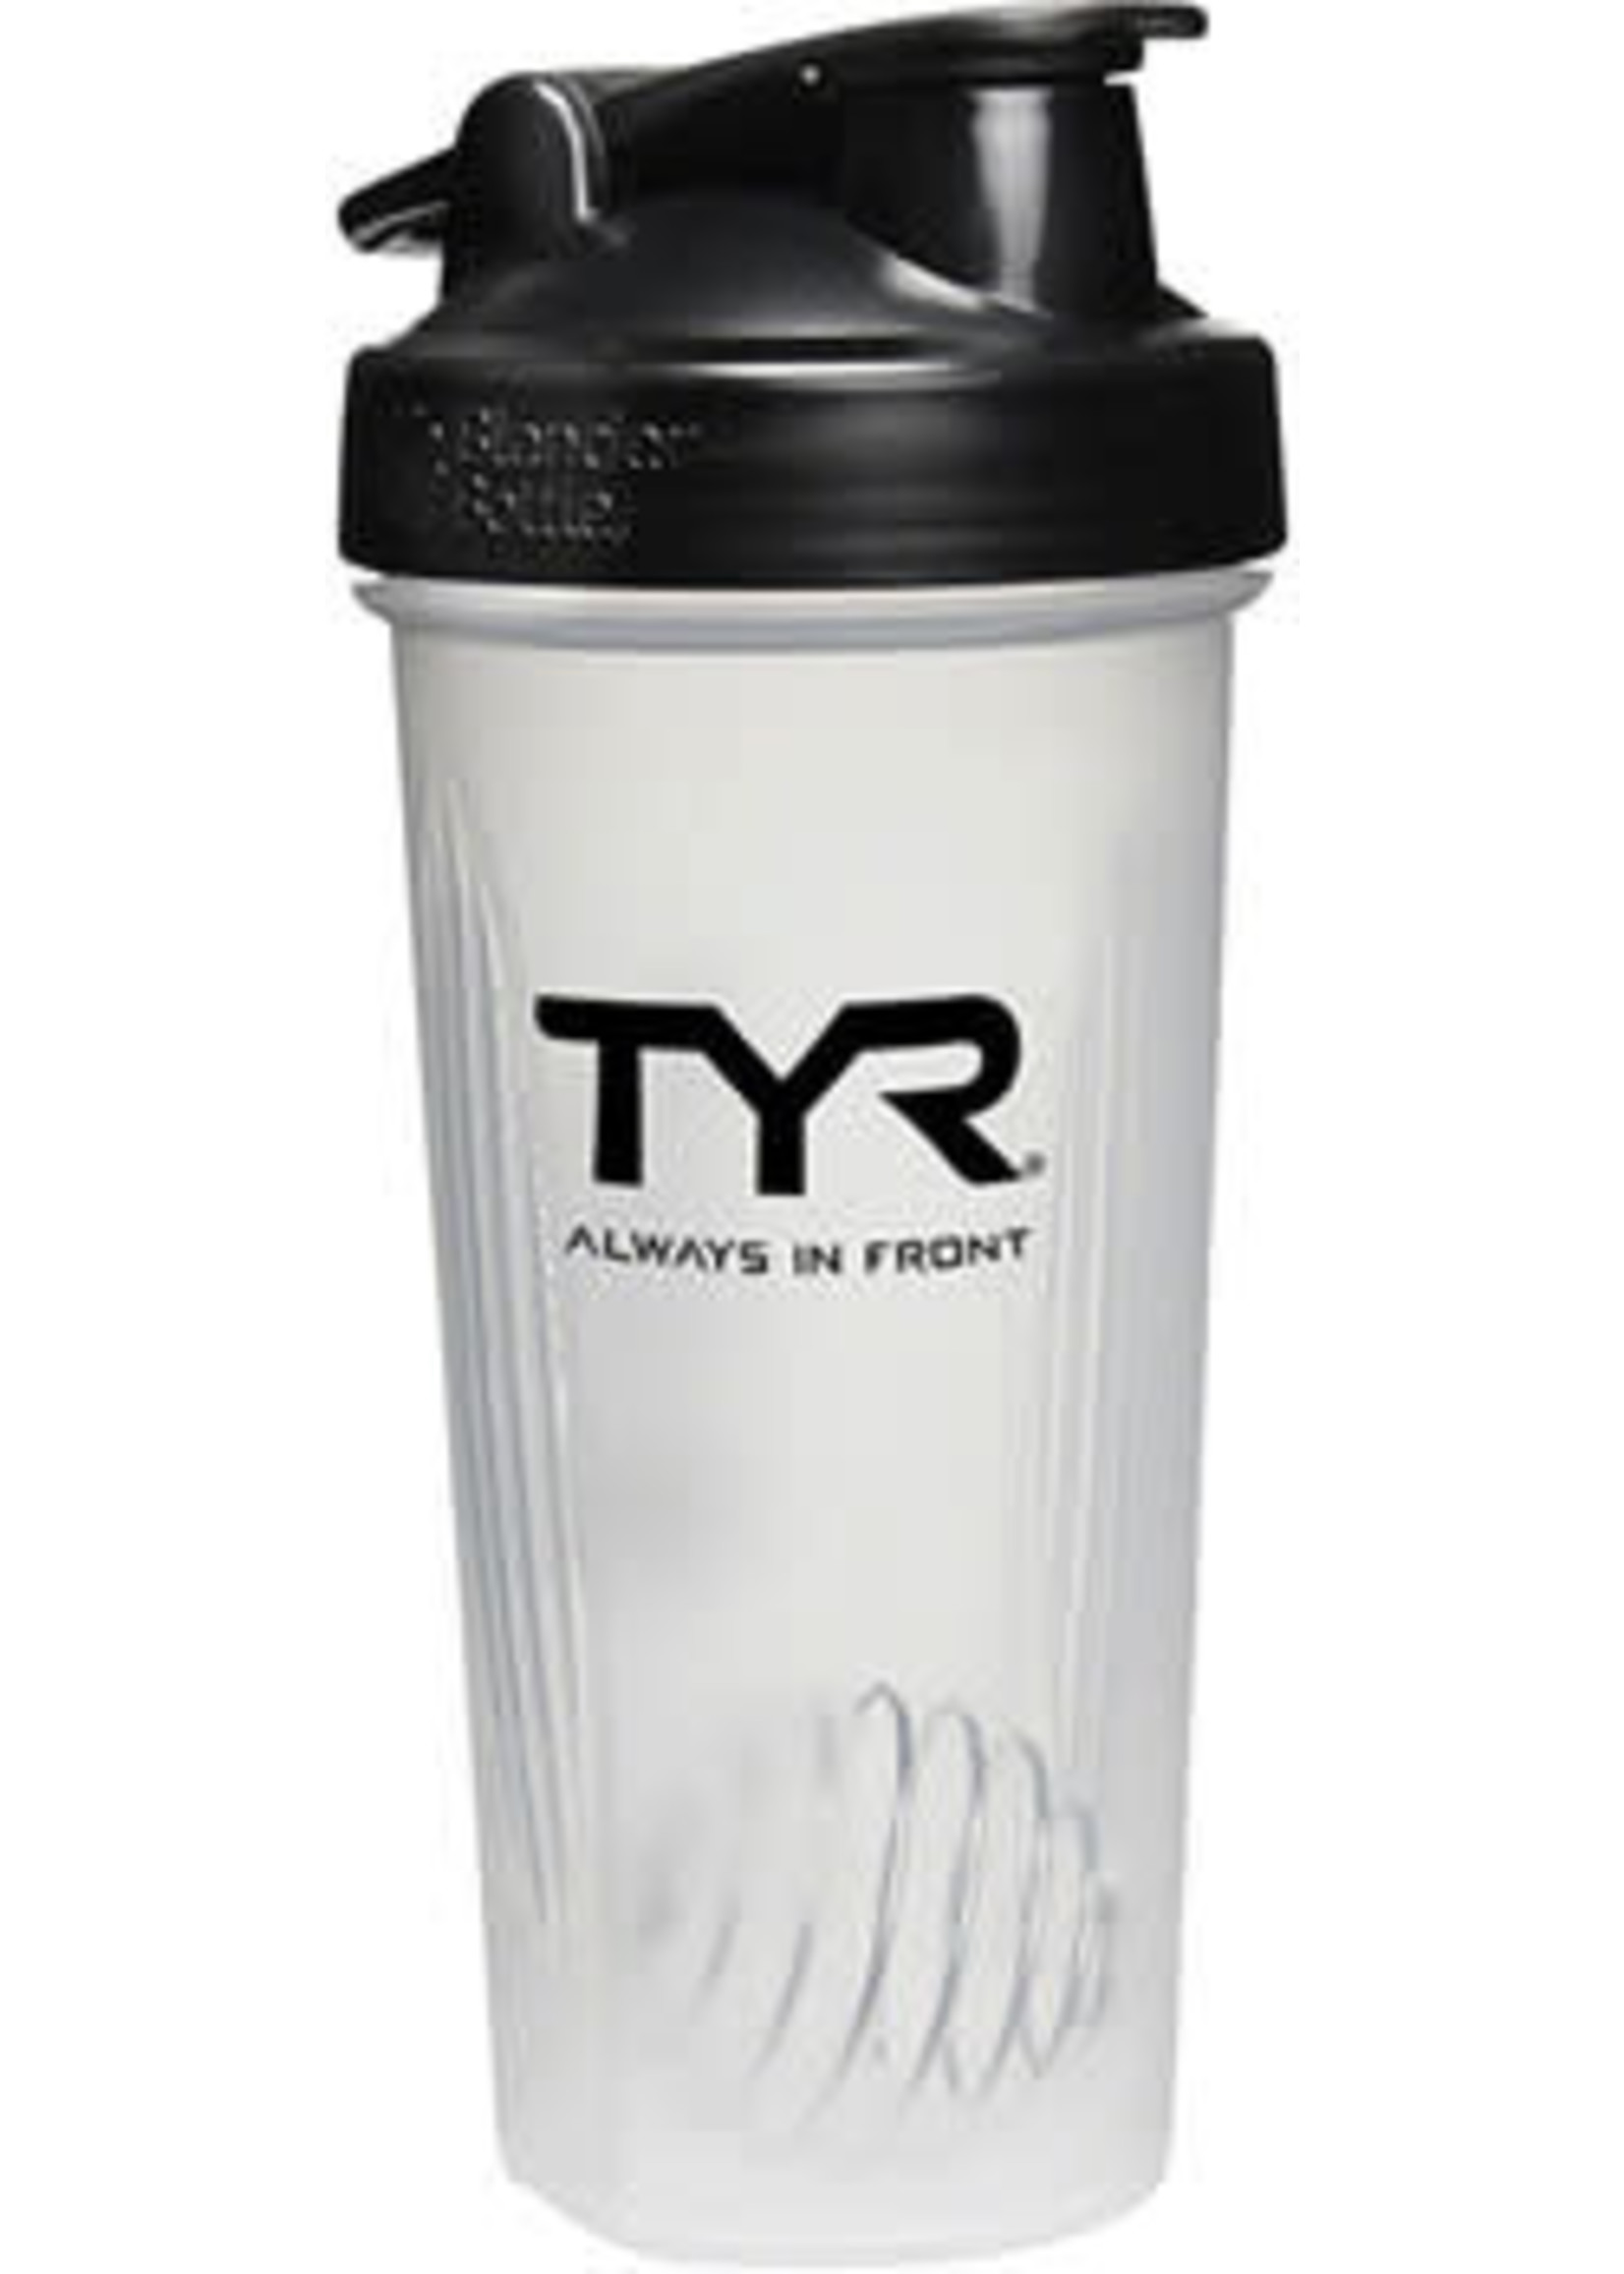 TYR TYR Blender Water Bottle: Clear 28oz